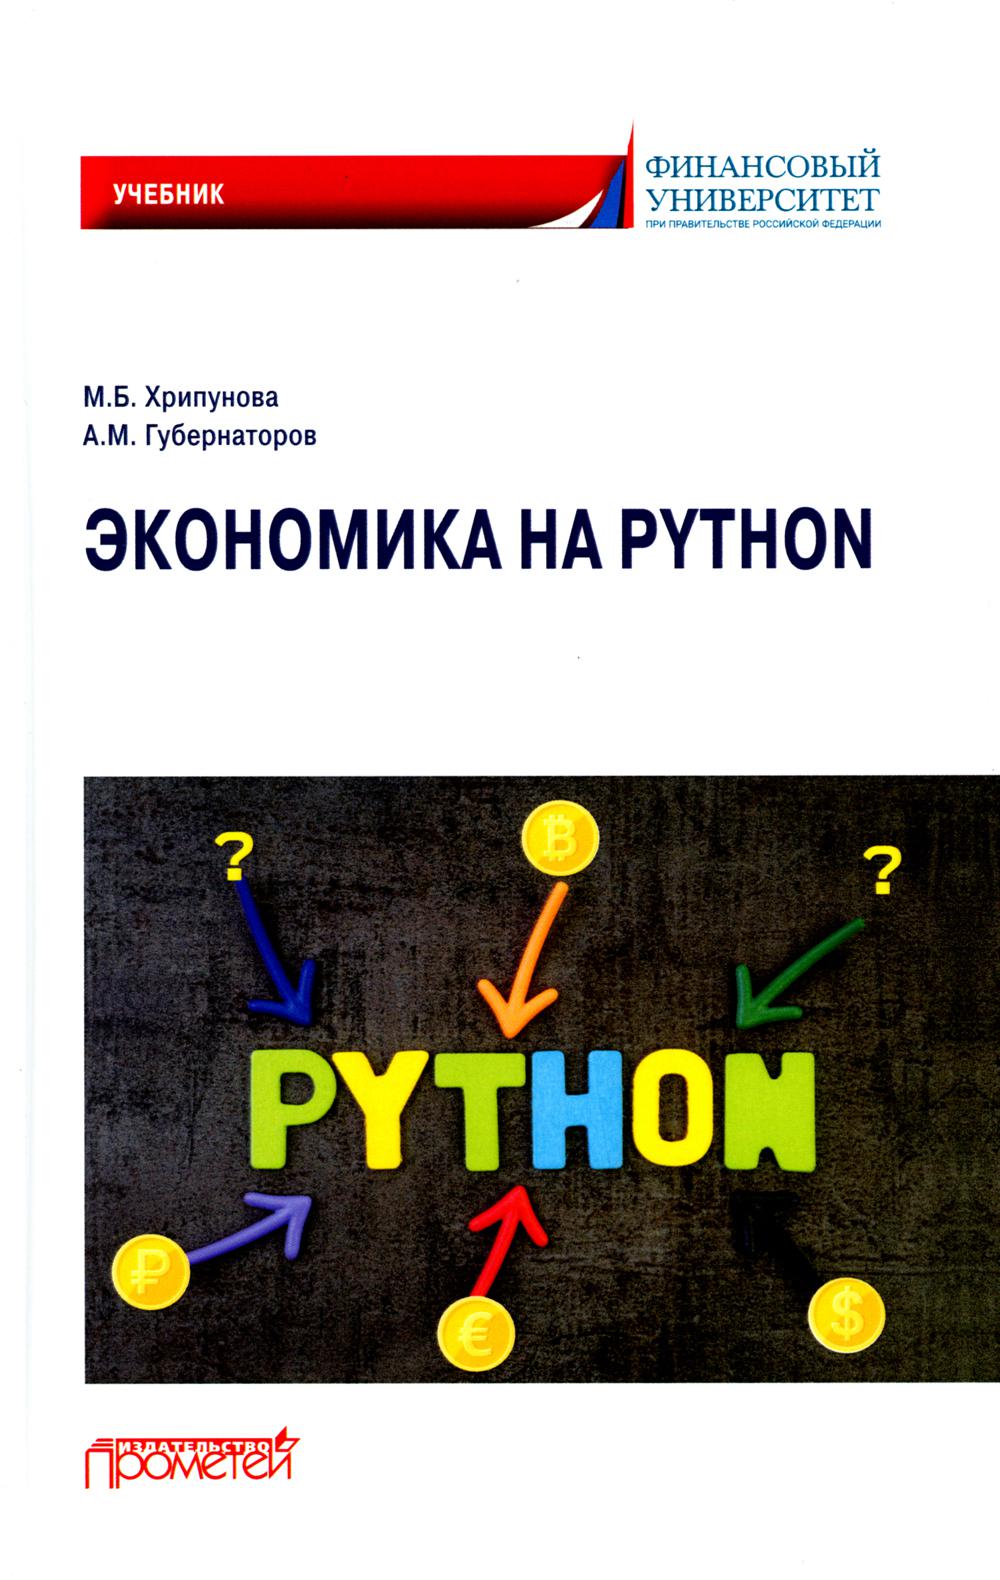 Экономика на Python: учебник